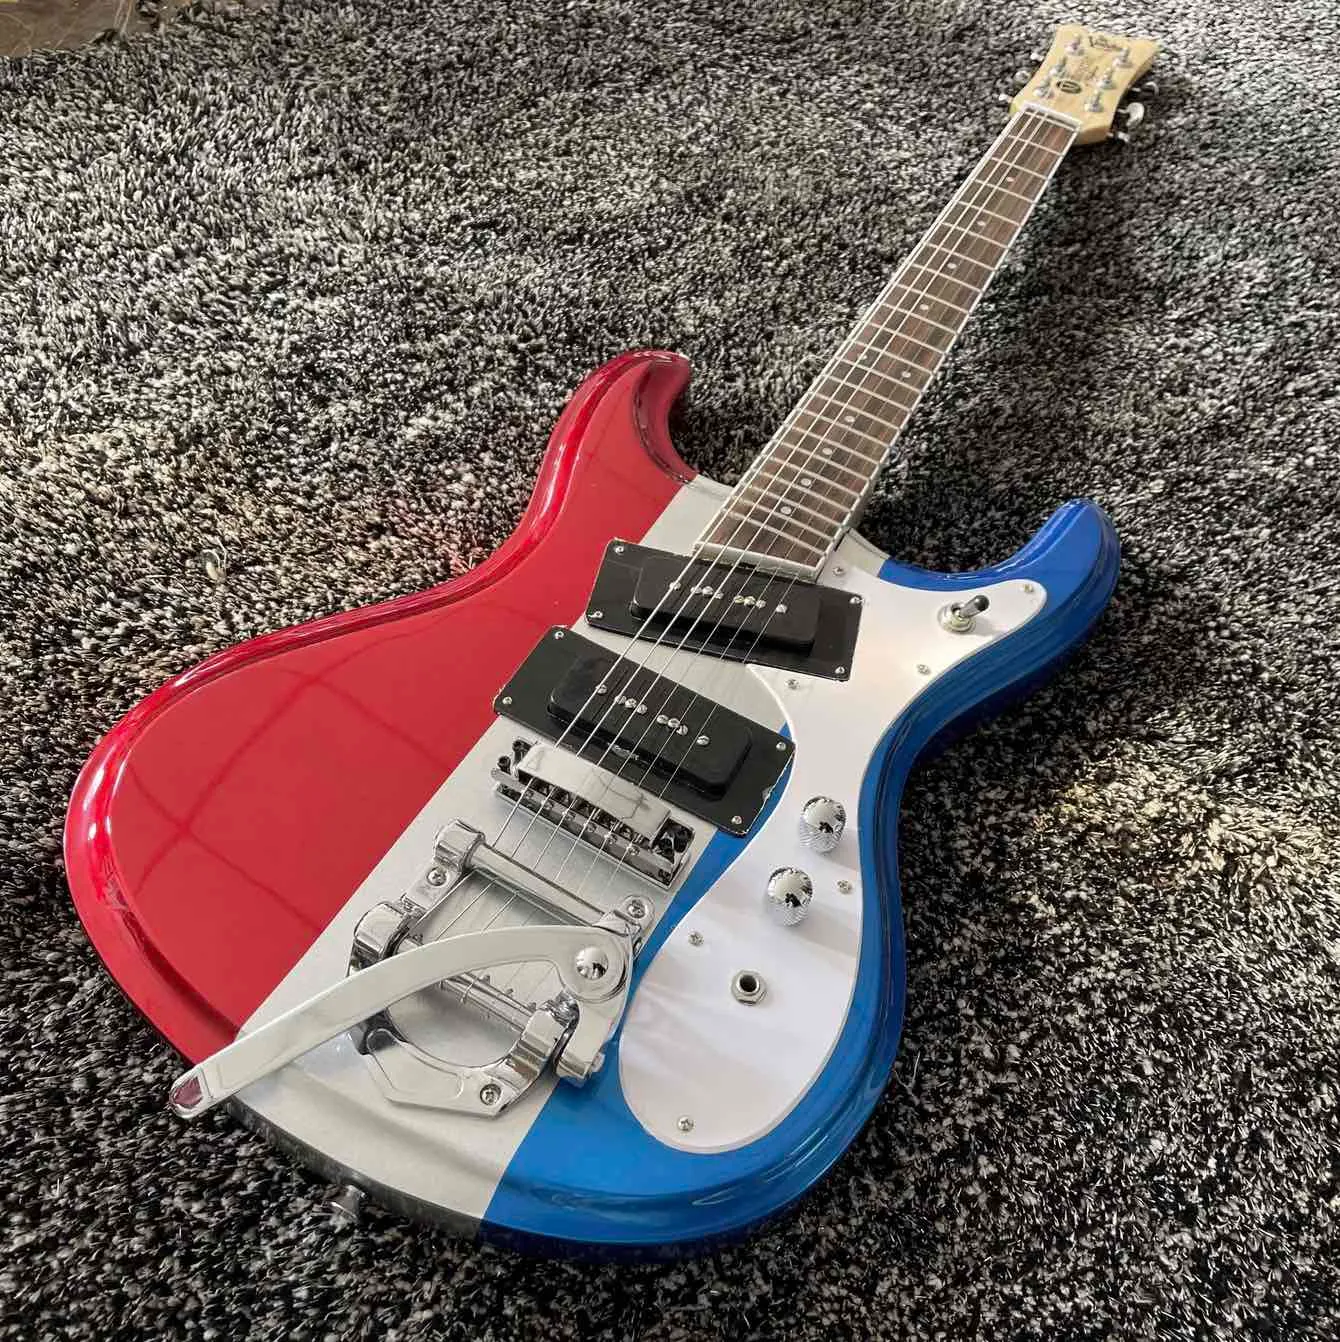 Anpassad Mosrite Electric Guitar Johnny Ramone Venture Red White Blue Color with Bigs Tremolo Bridge Dark Aqua White PickGuard Black P-90 Pickups